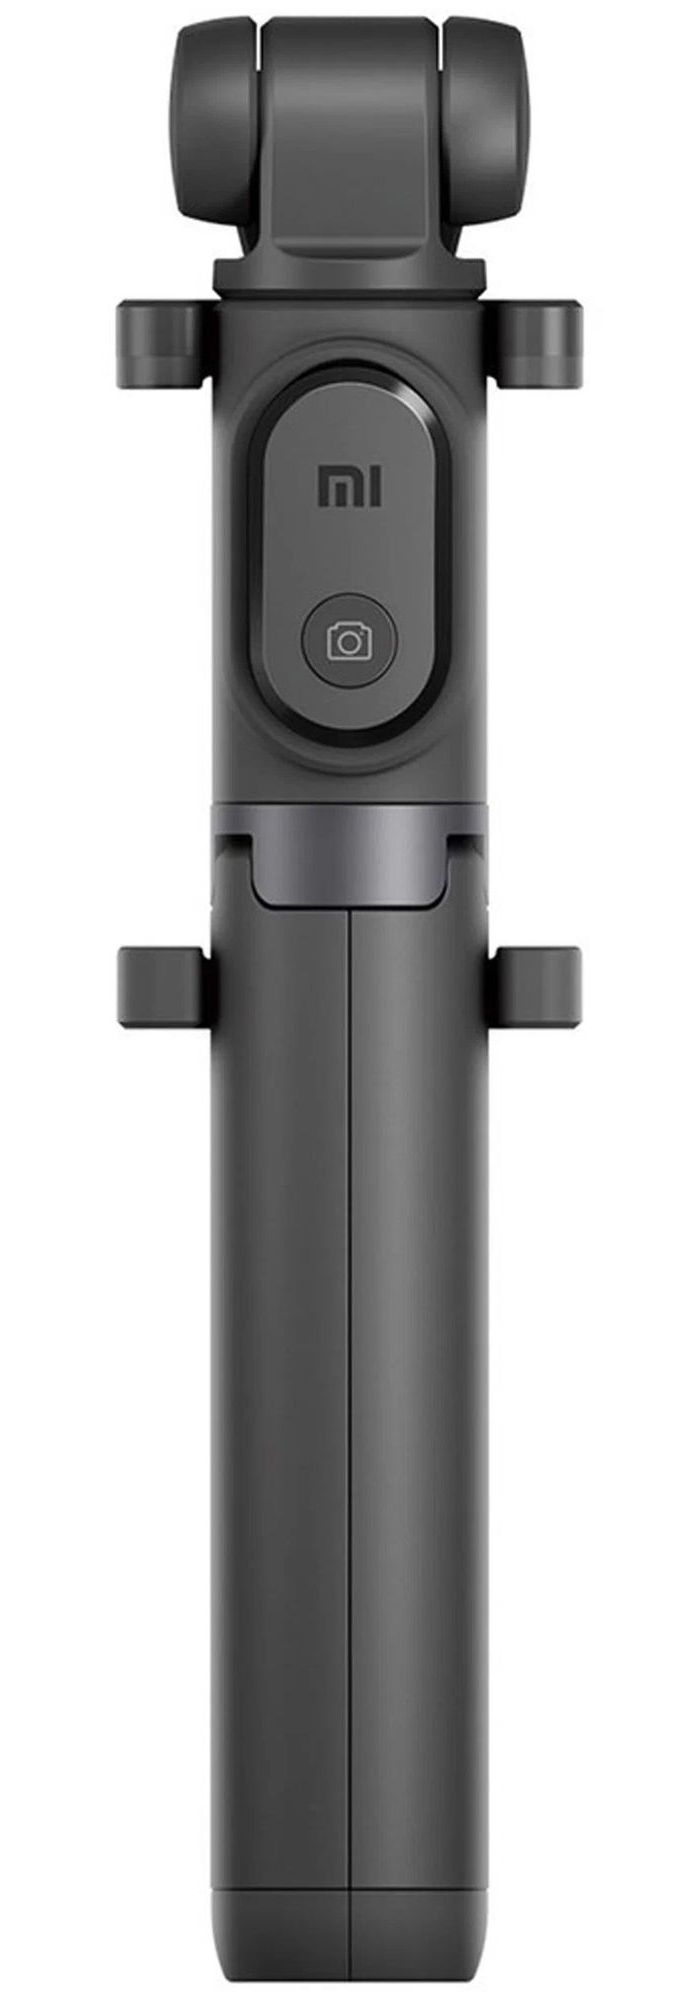 Монопод Xiaomi Mi Selfie Stick Tripod Black (XMZPG01YM) xiaomi монопод трипод xiaomi mi bluetooth selfie stick tripod xmzpg01ym черный